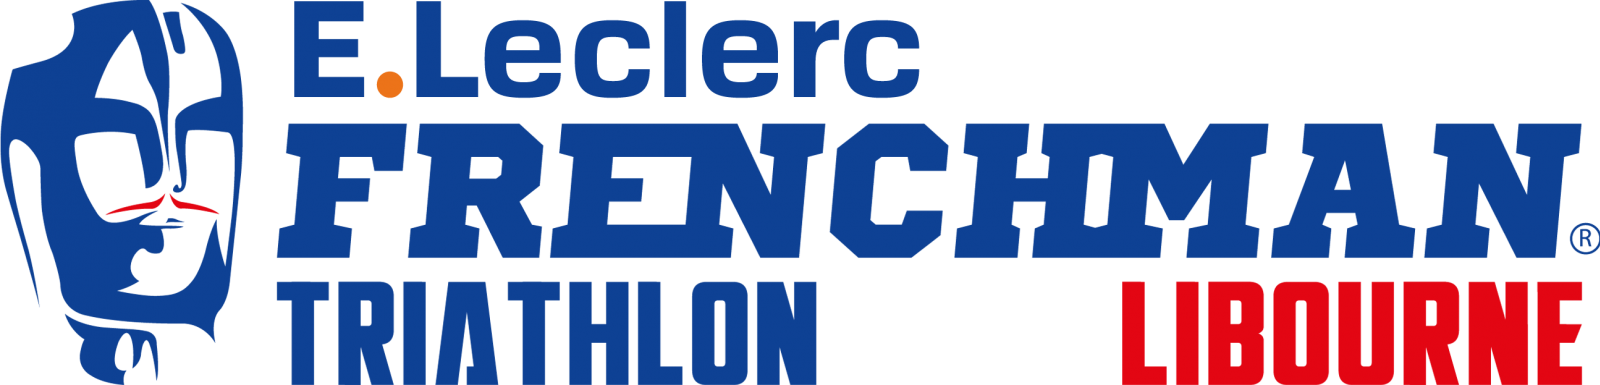 E.Leclerc Frenchman Triathlon Libourne